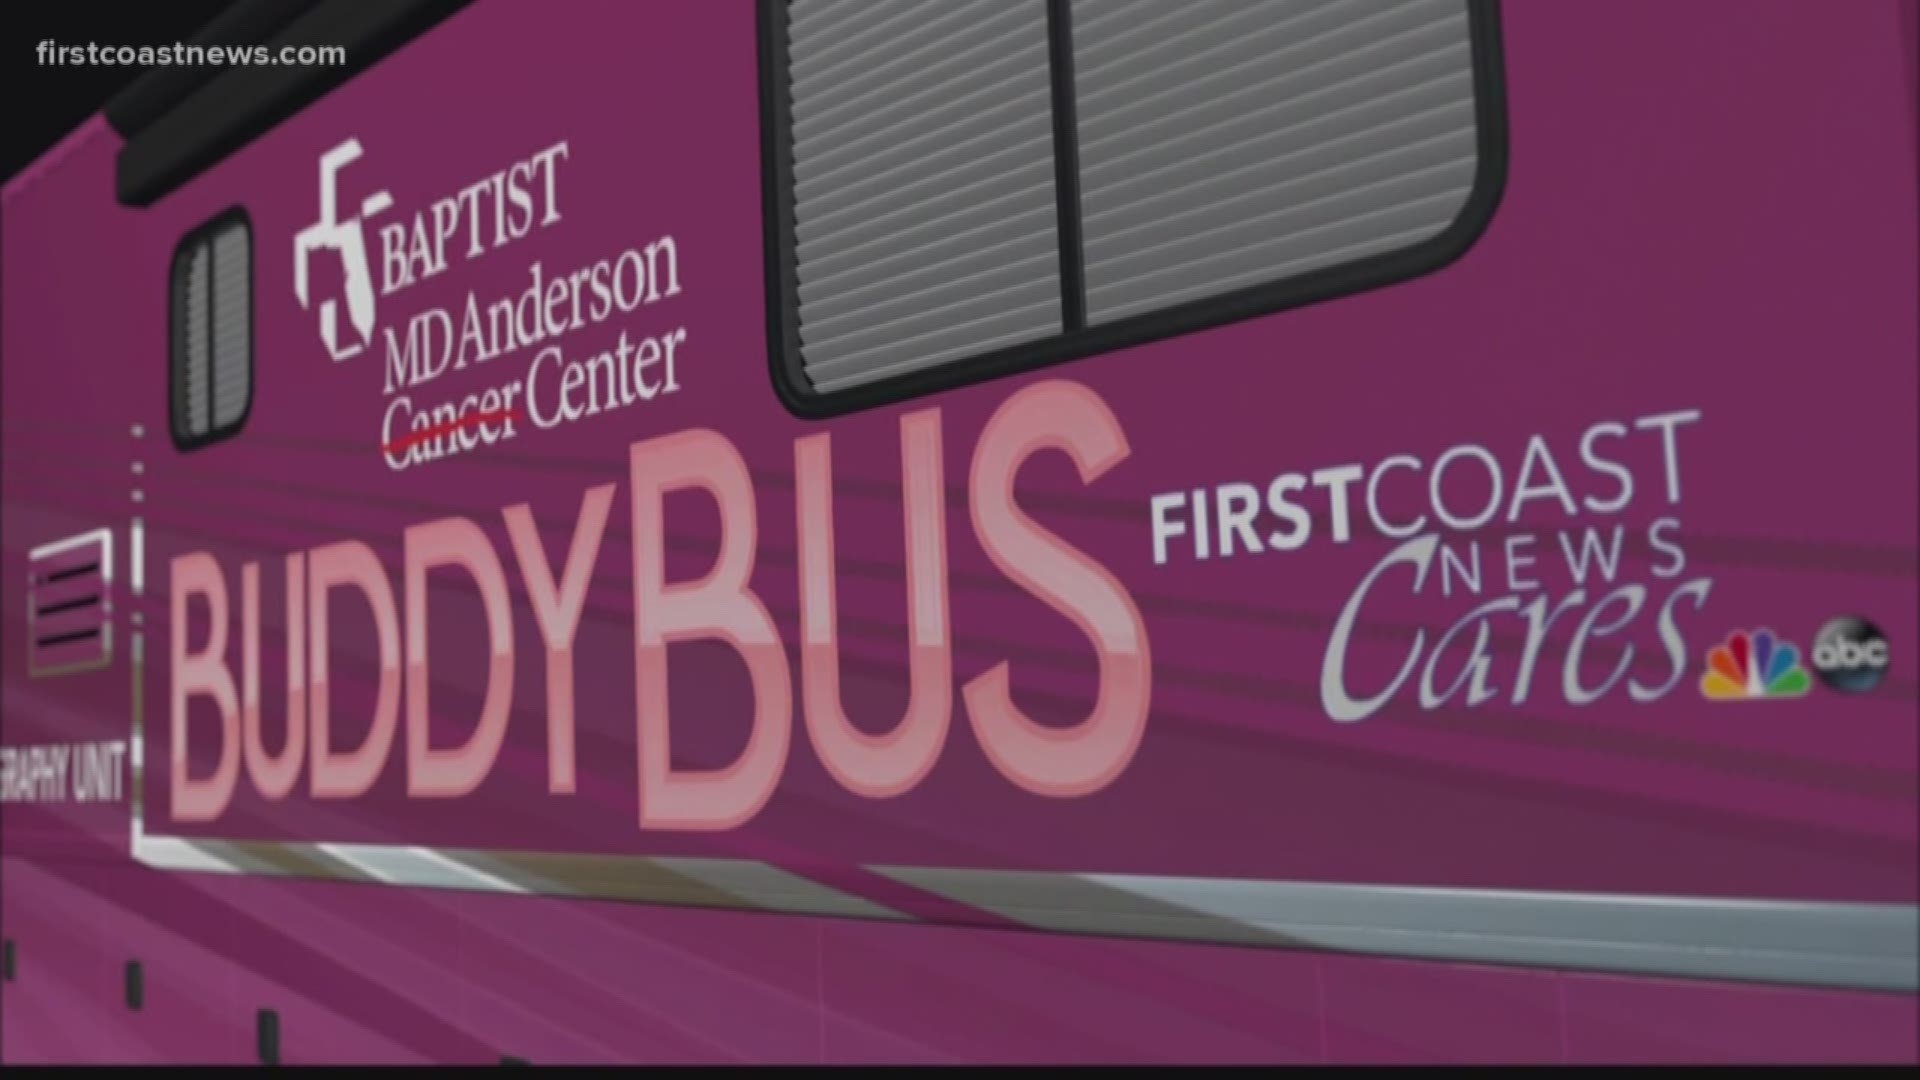 Buddy Bus Donation